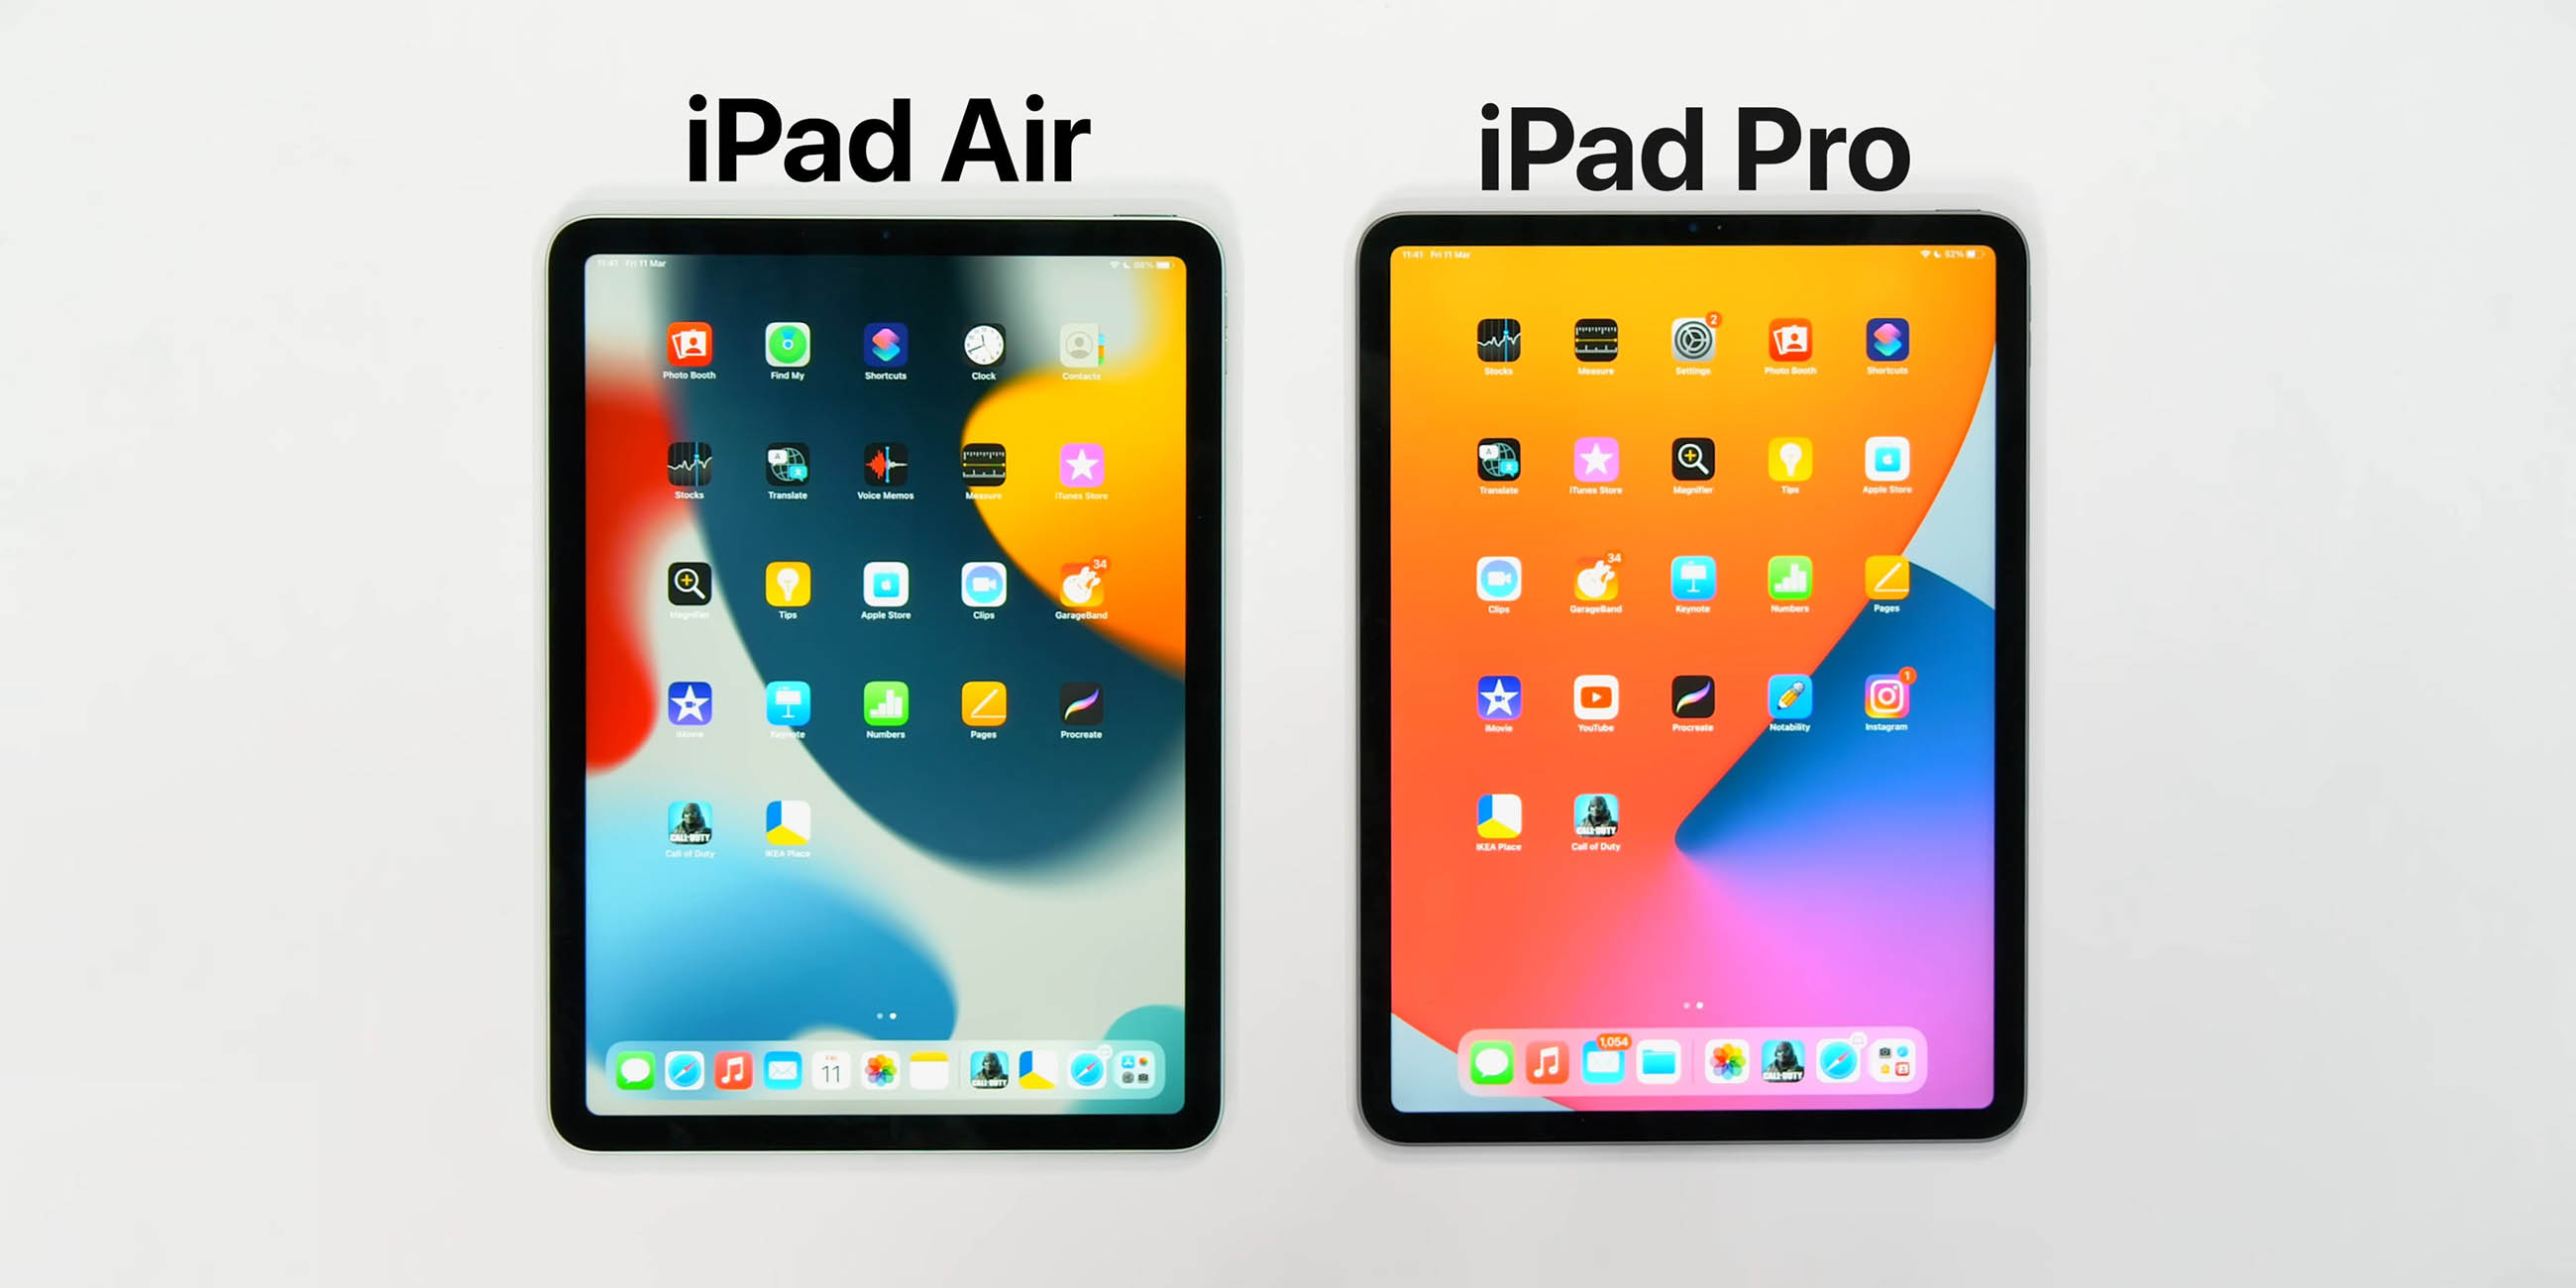 ipad pro vs ipad air design and display